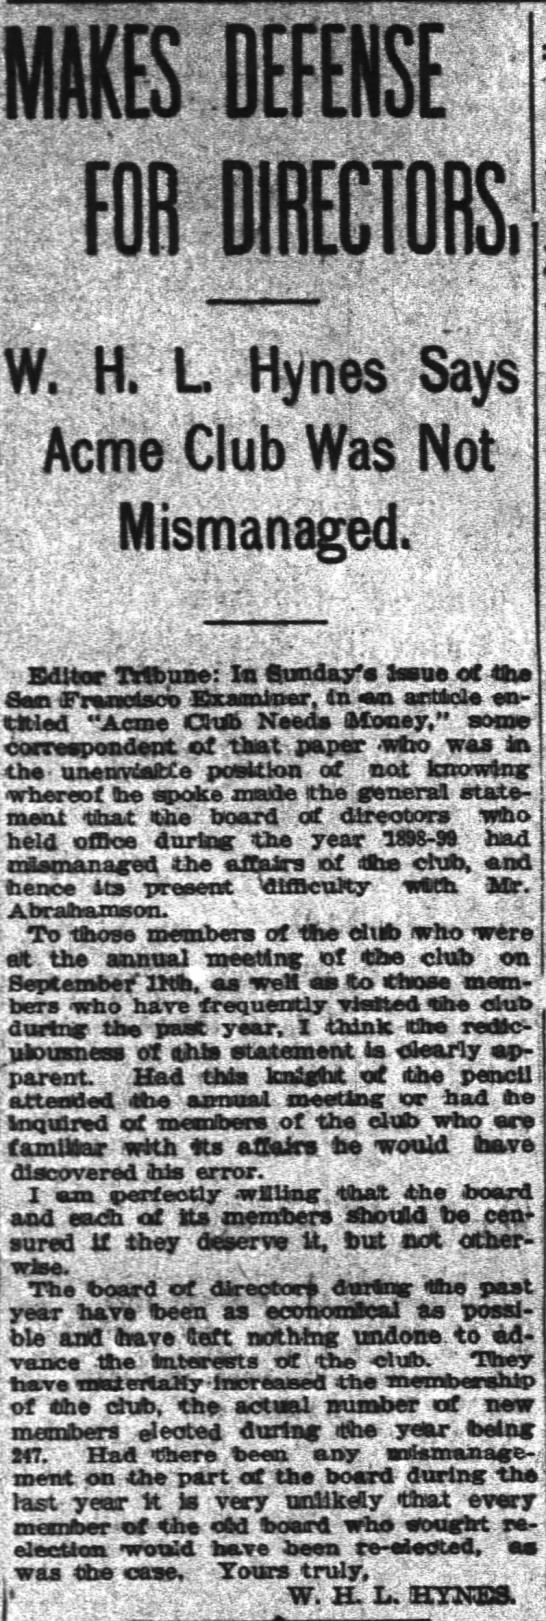 W. H. L. Hynes Says Acme Club Was Not Mismanaged. - 